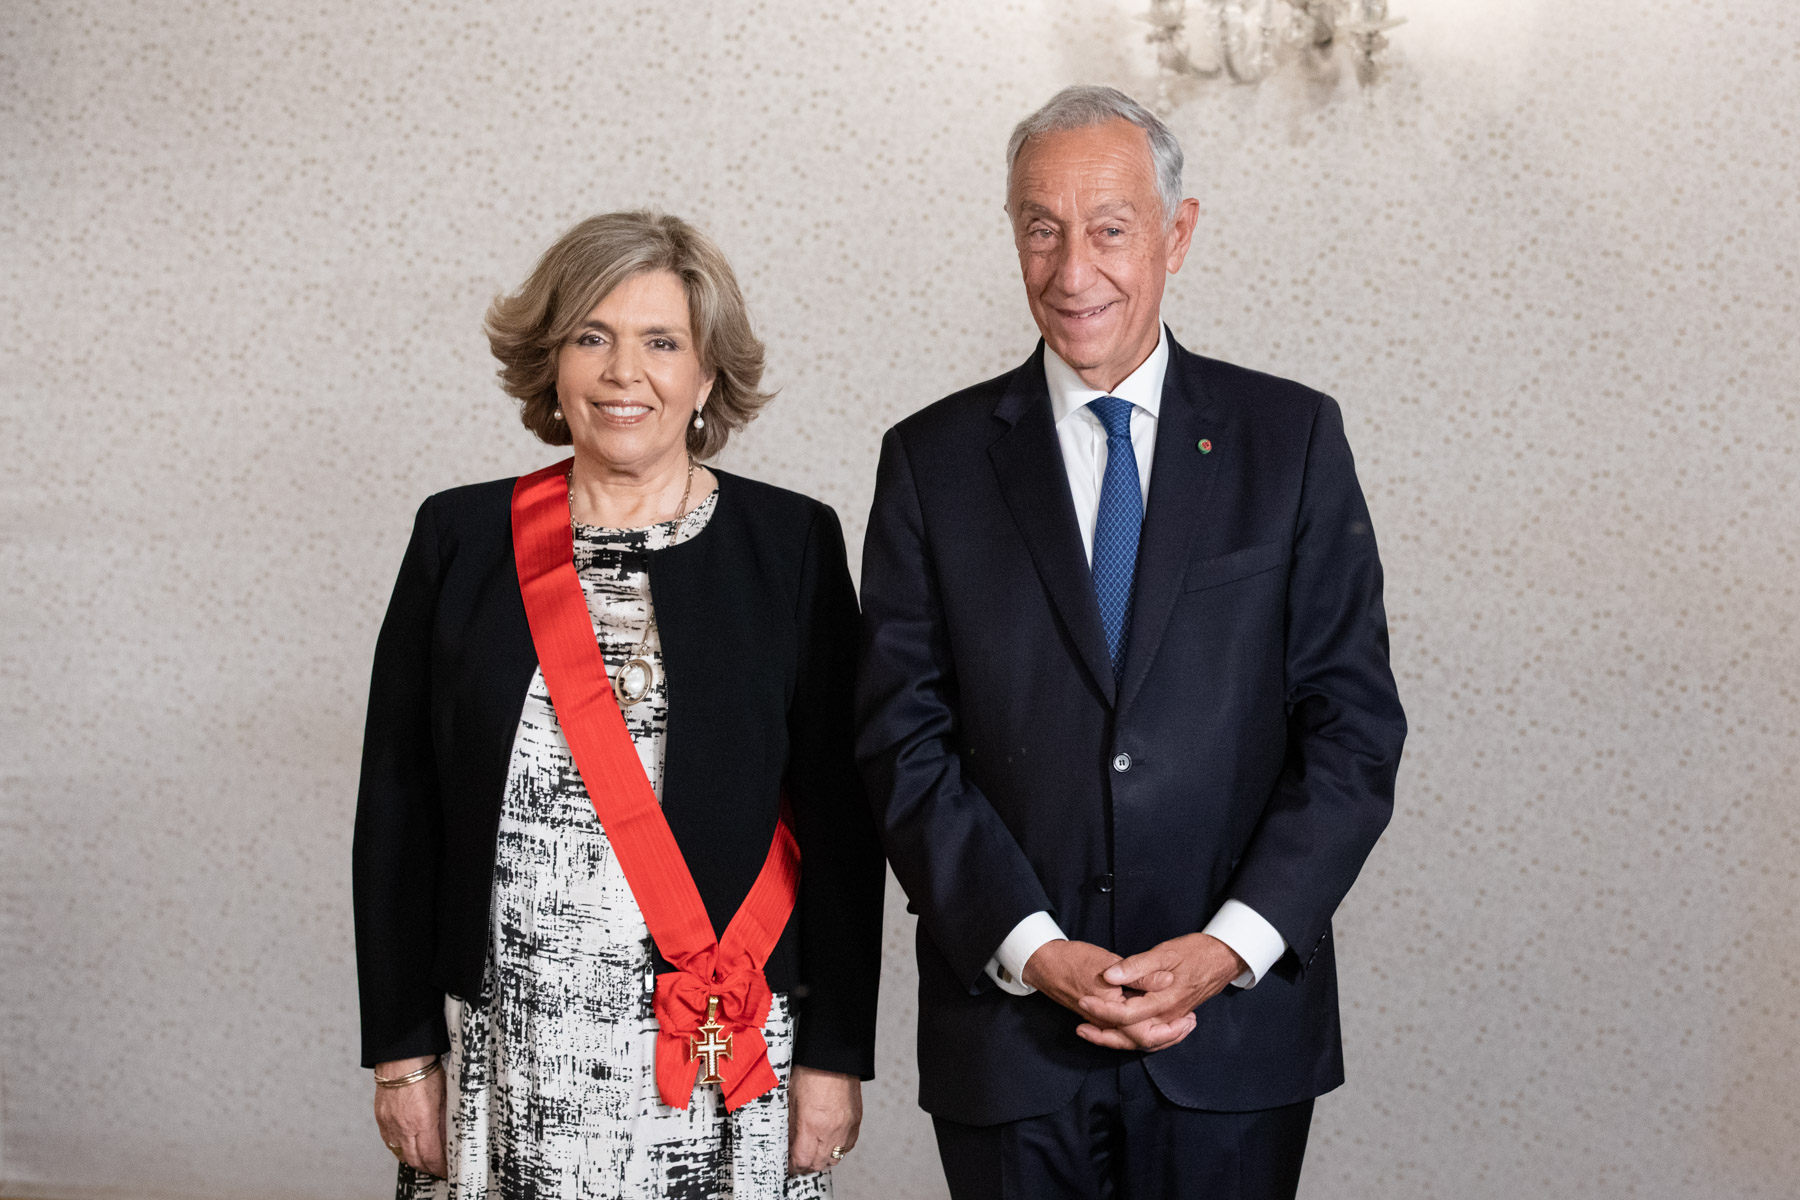 Presidência da República Portuguesa